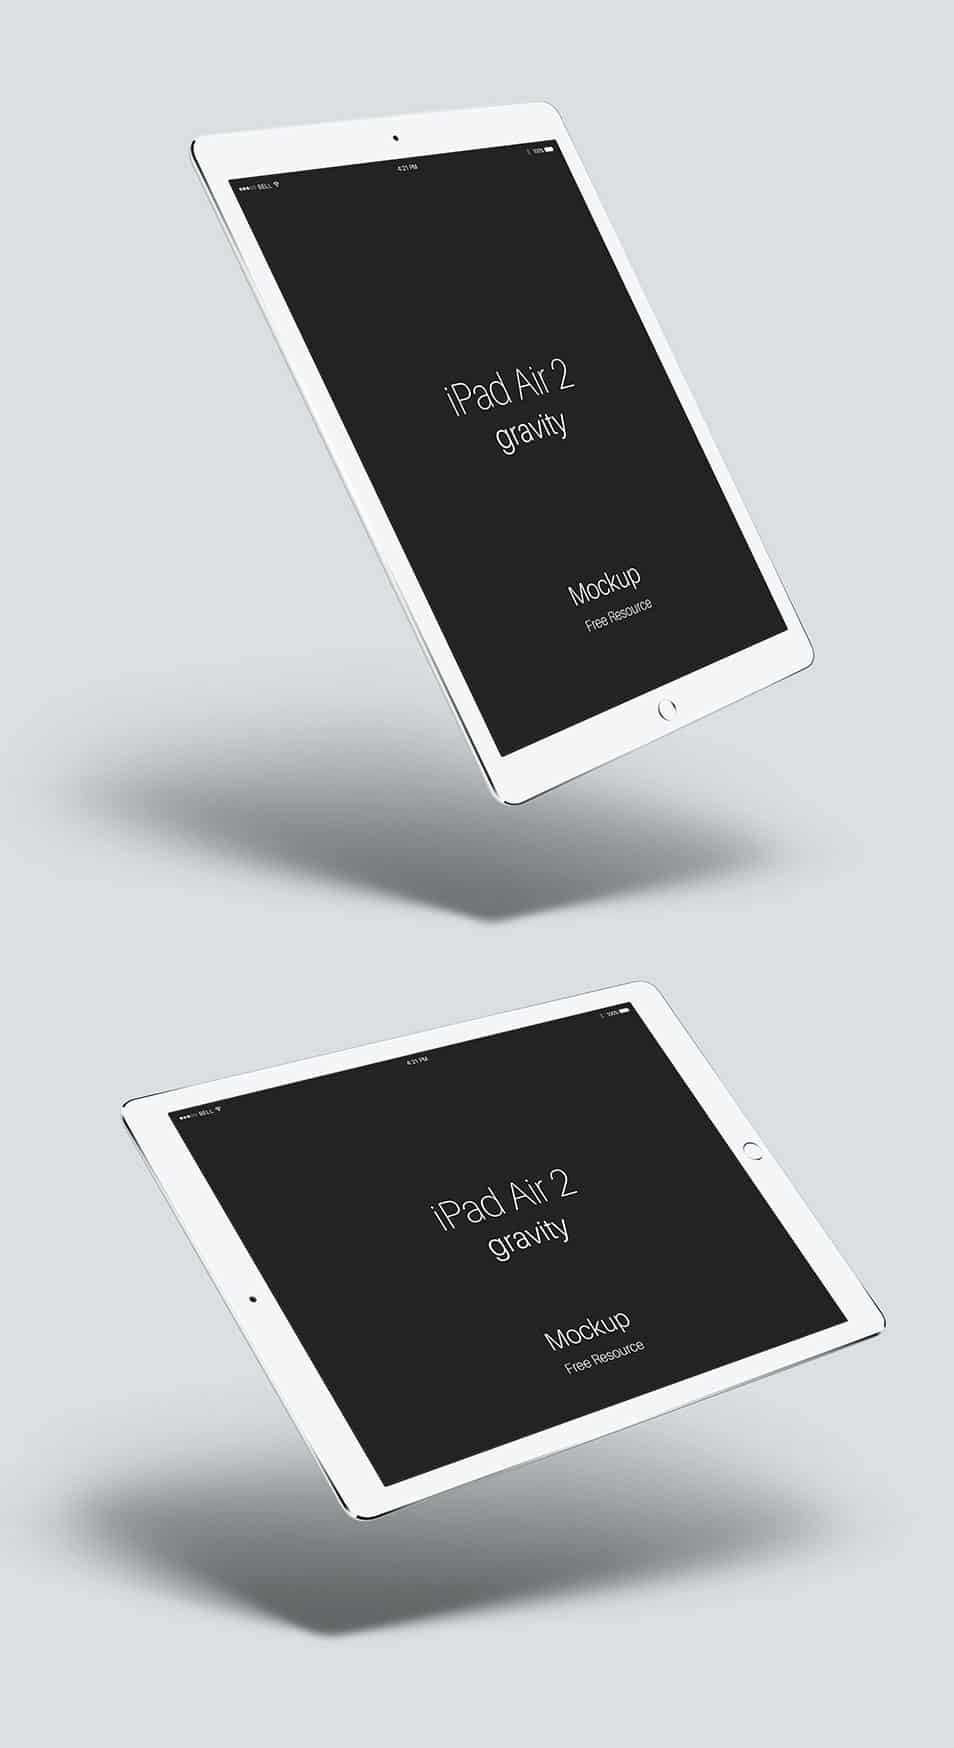 PSD iPad Air 2 Gravity Mockup